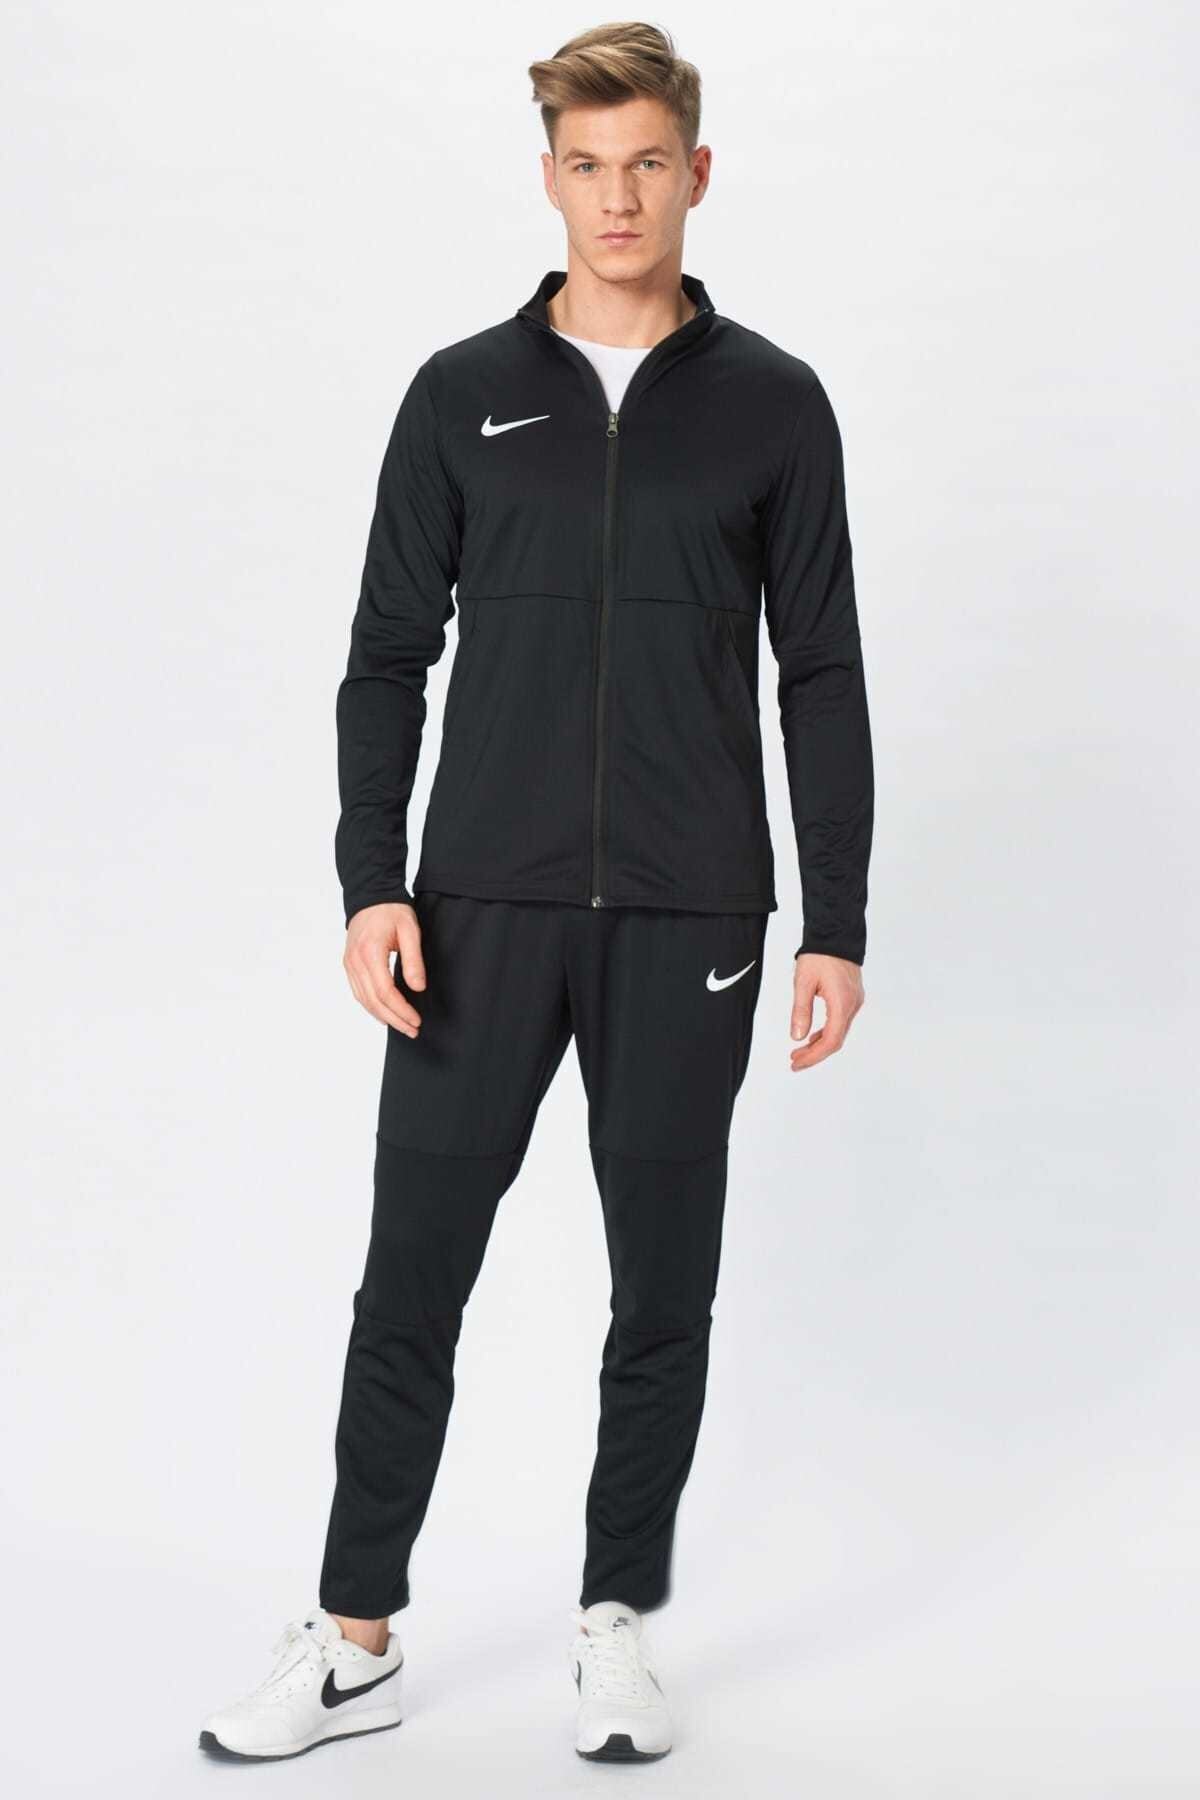 advocaat rand arm Nike Erkek Eşofman Takımı - M Nk Dry Park18 Track Suit K - Aq5065-010 |  60%'YE KADAR İNDİRİM | yoglobalnetwork.com